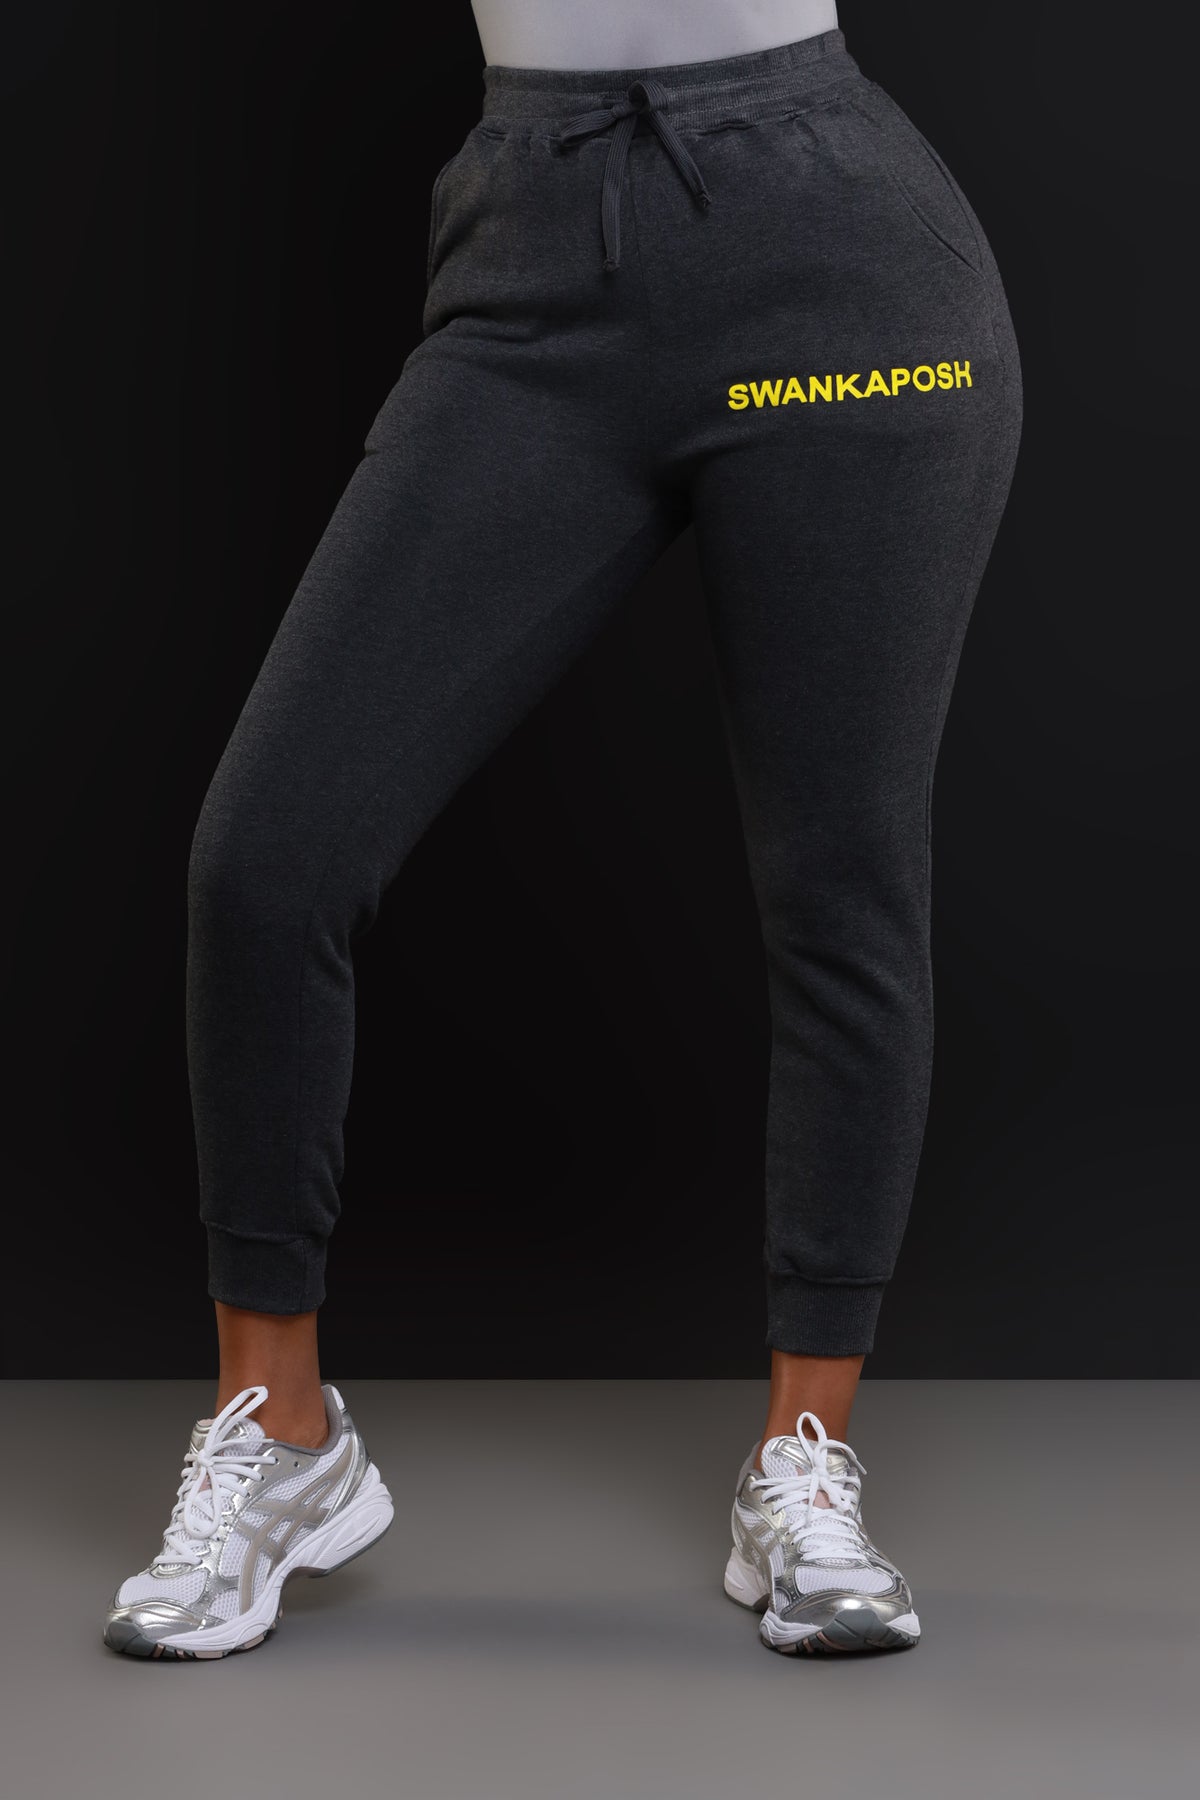 
              Swankaposh Logo Joggers - Charcoal Grey/Yellow - Swank A Posh
            